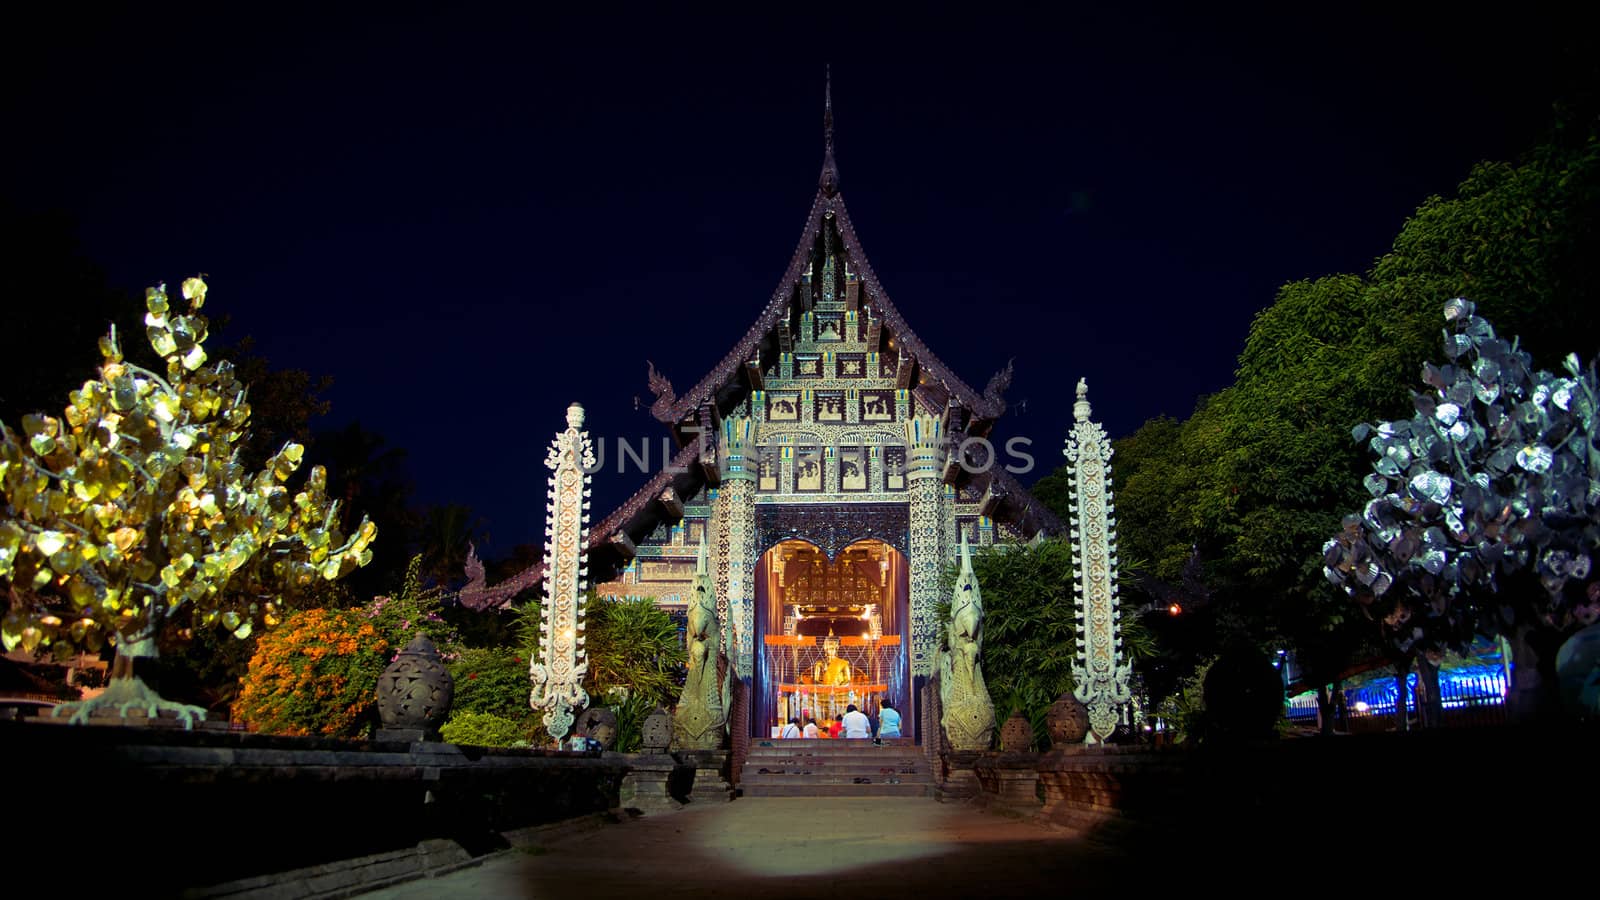 Night prayer at Lok Molee temple in Chiangmai, Thailand